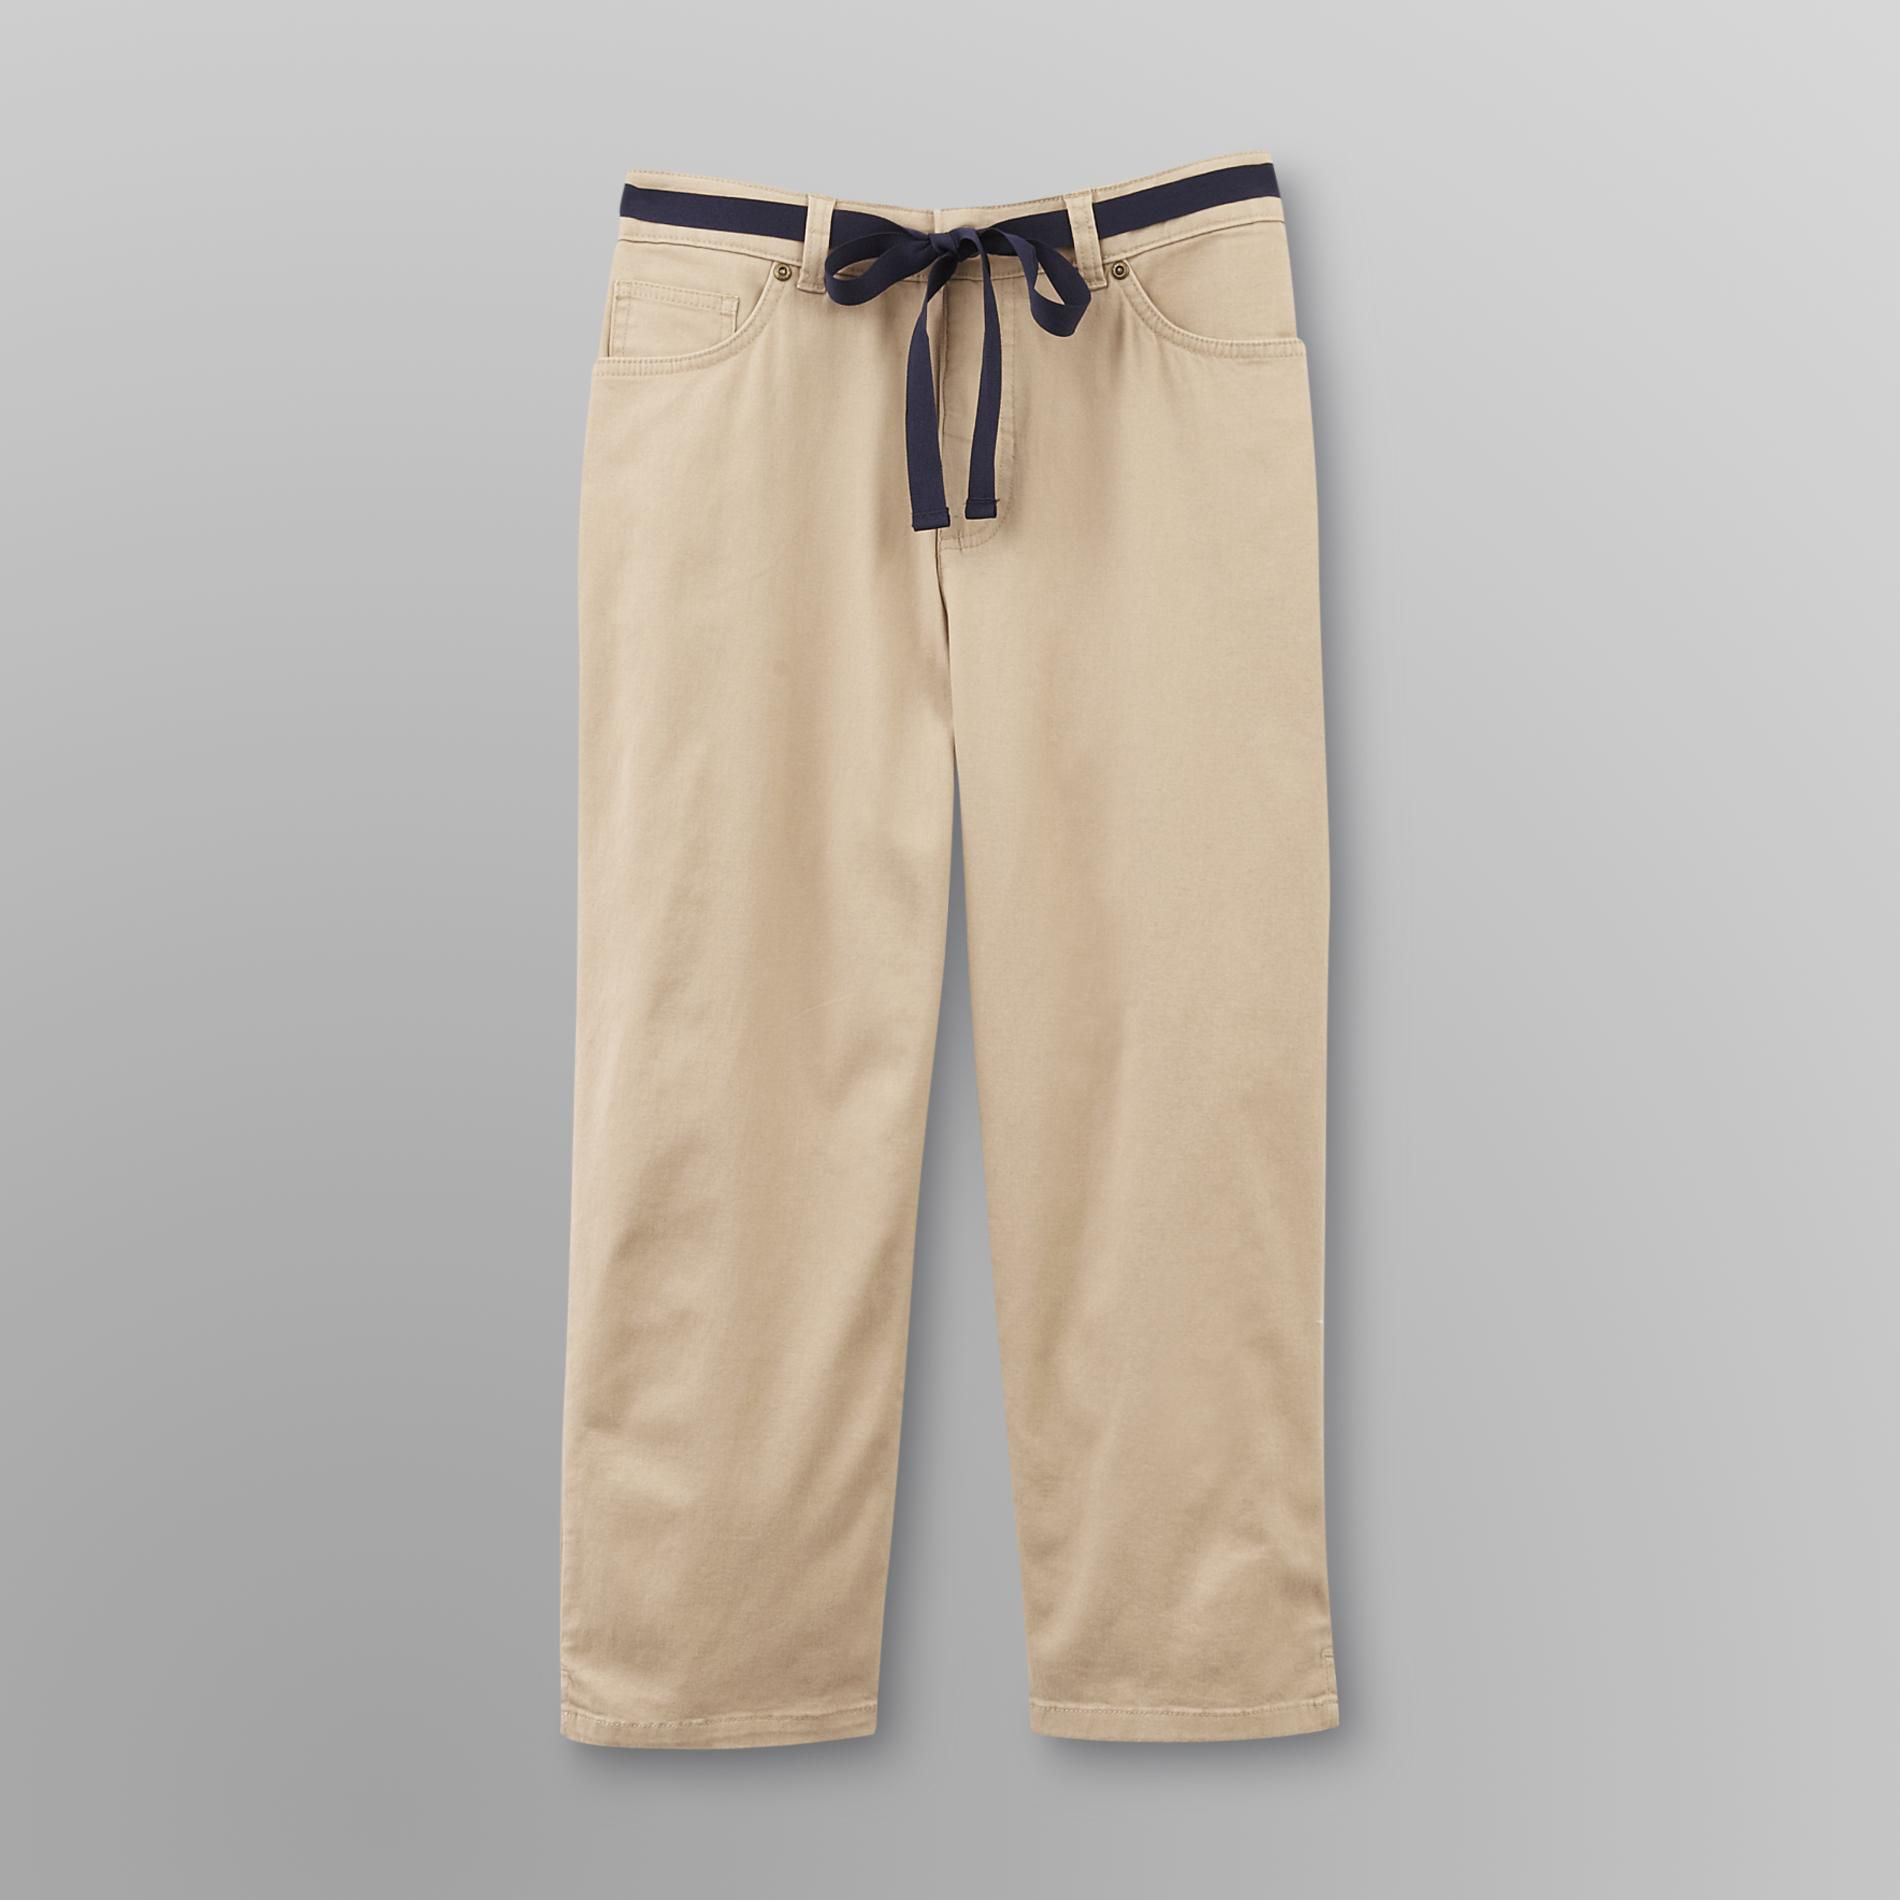 Basic Editions Women's Belted Color Capri Pants